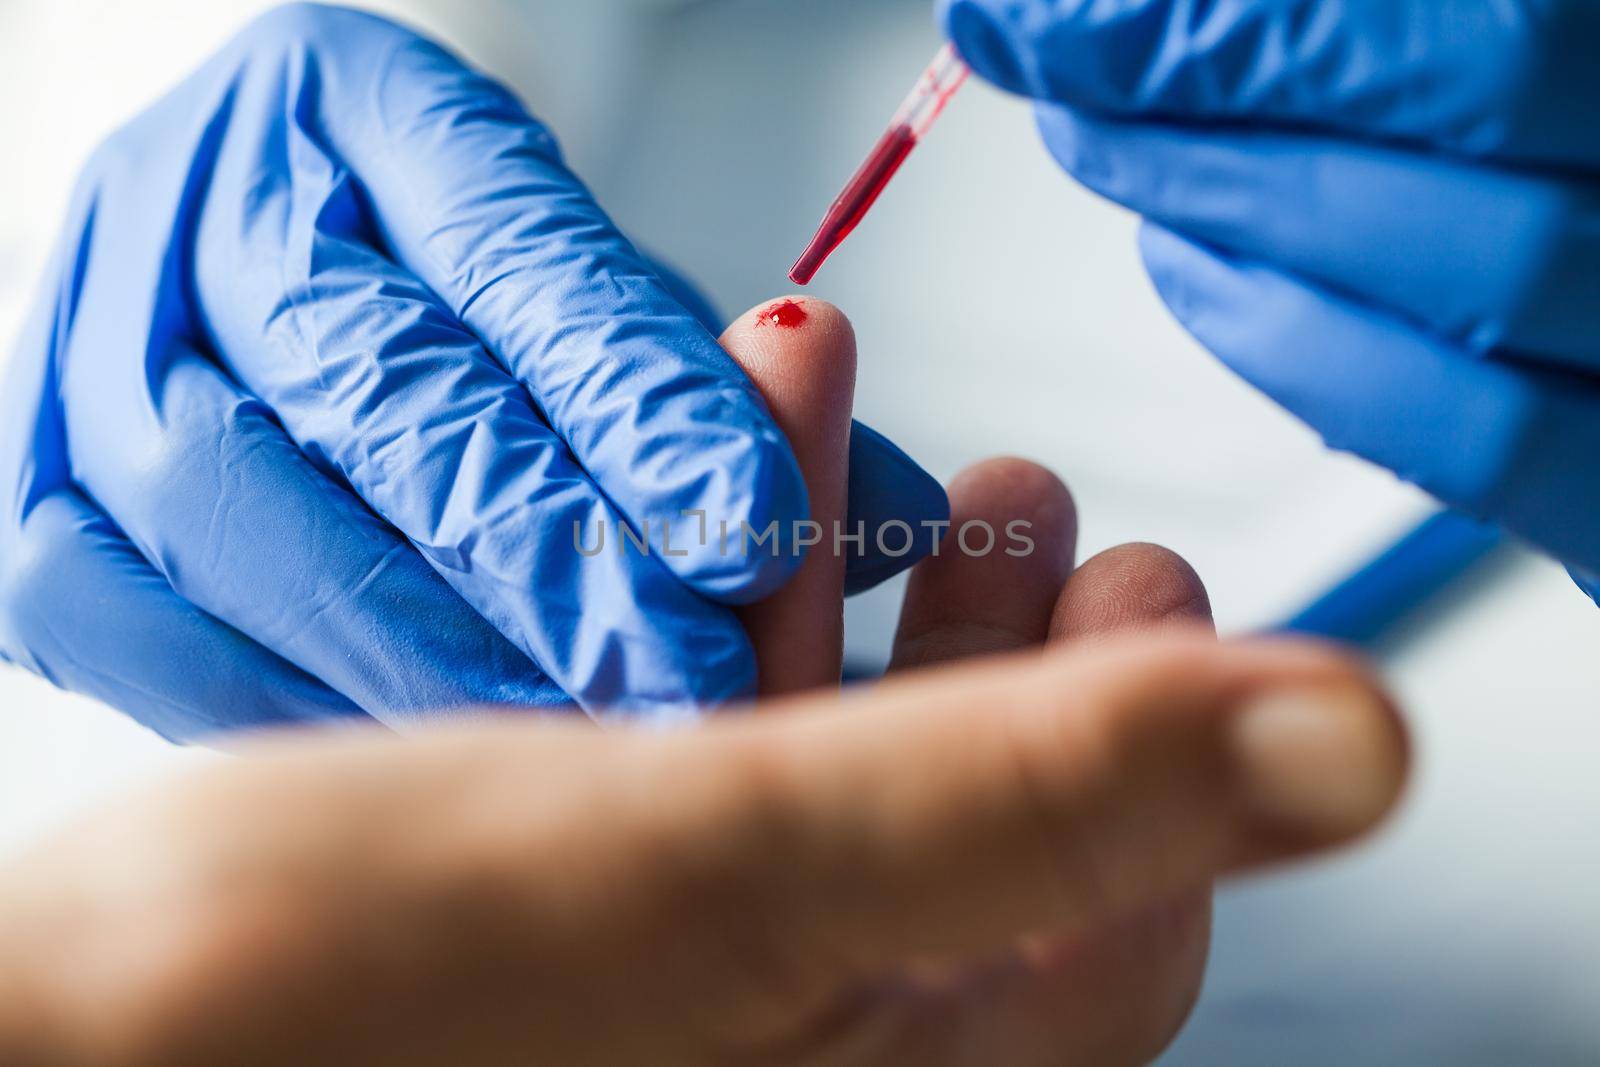 Medical technician EMS doctor taking finger prick PRP patient blood sample using pipette,Coronavirus COVID-19 global pandemic crisis outbreak,UK NHS rapid strep diagnostic antibody testing procedure